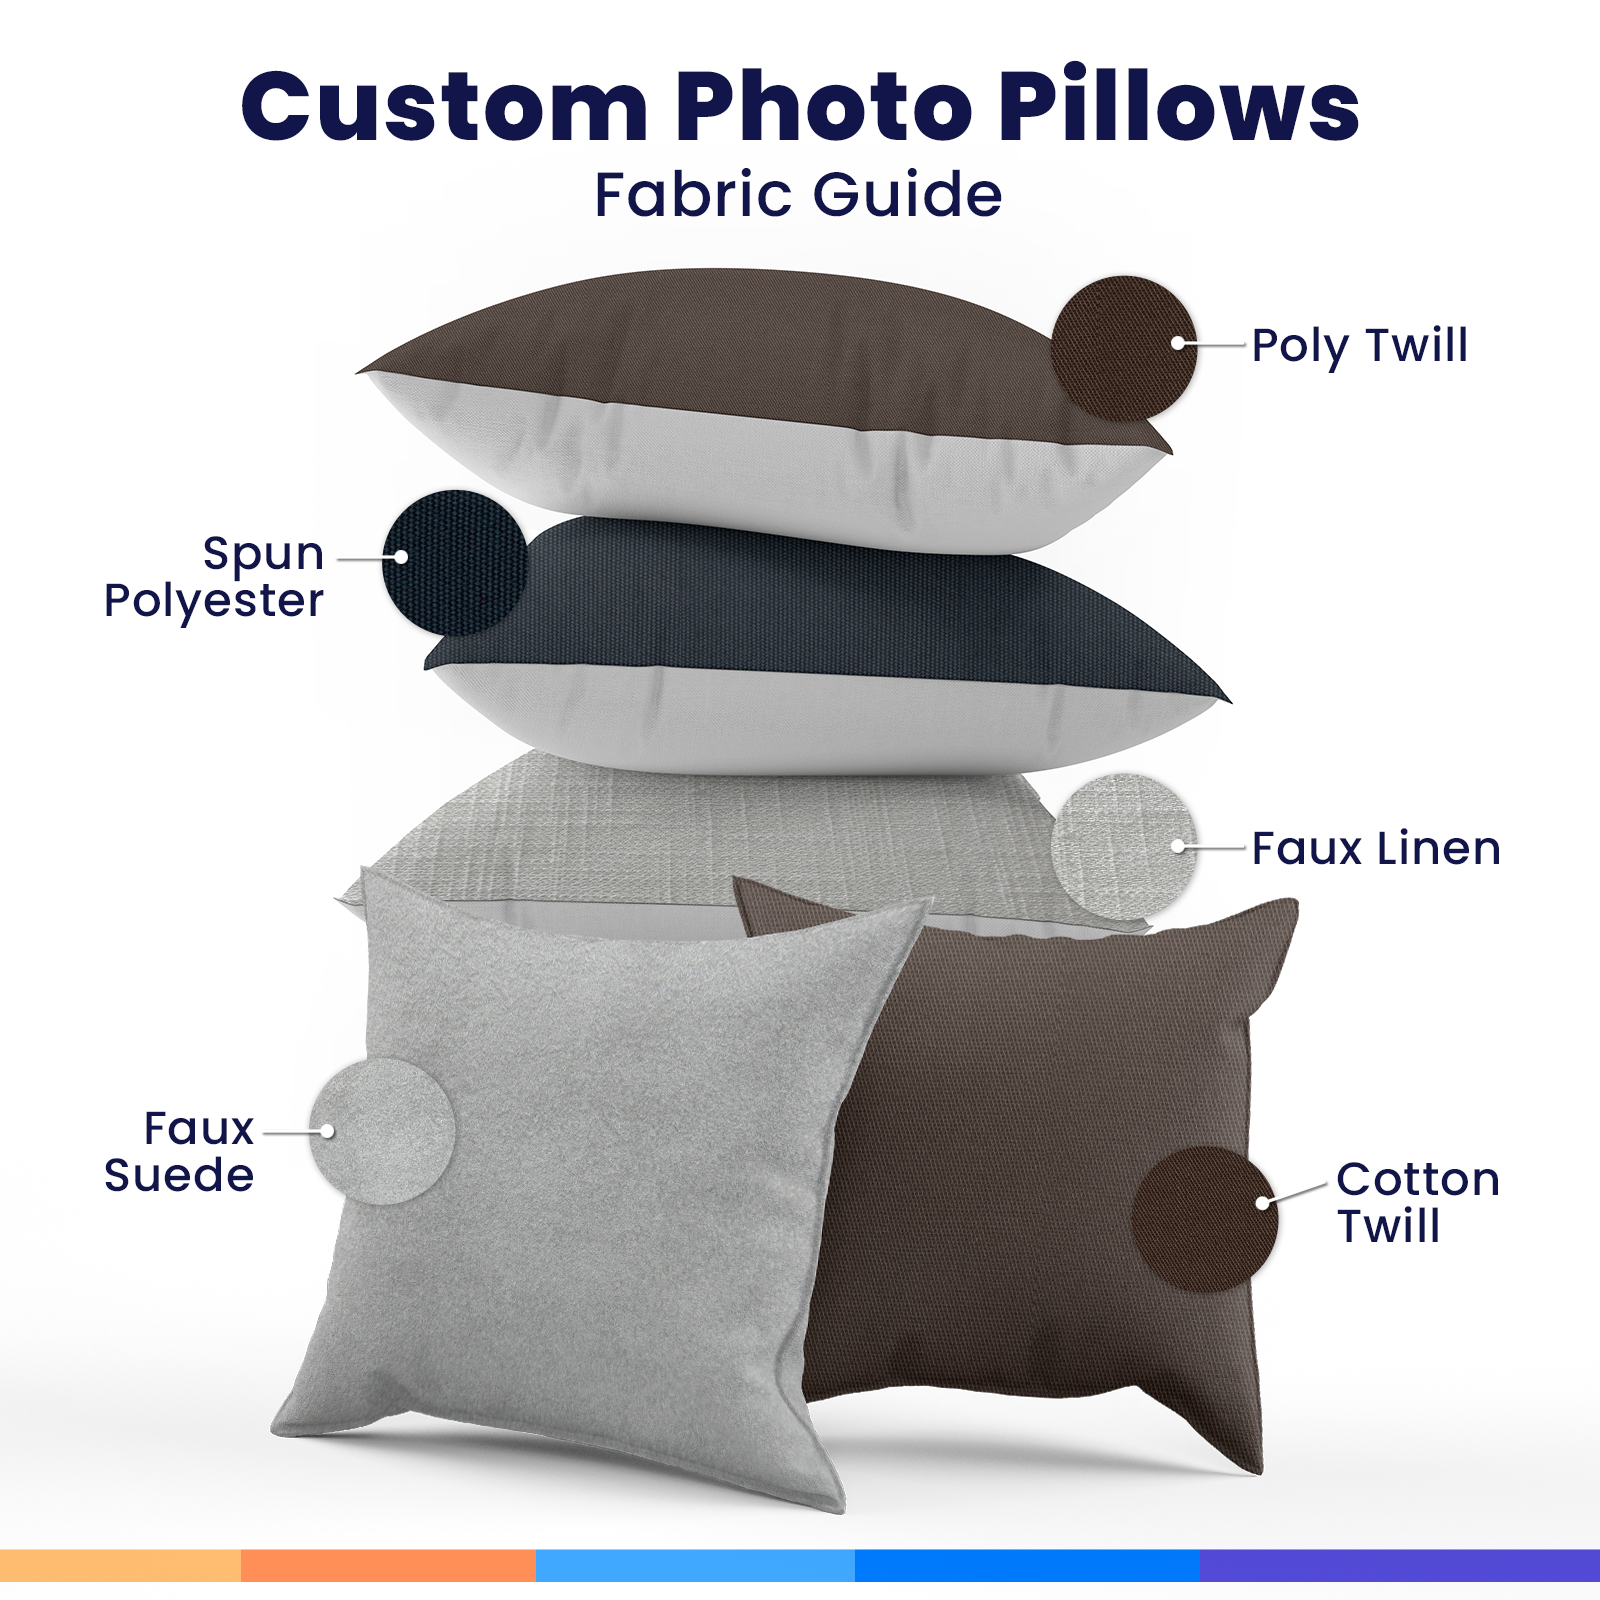 Bestfriend Gallery of 5 Custom Photo Pillow